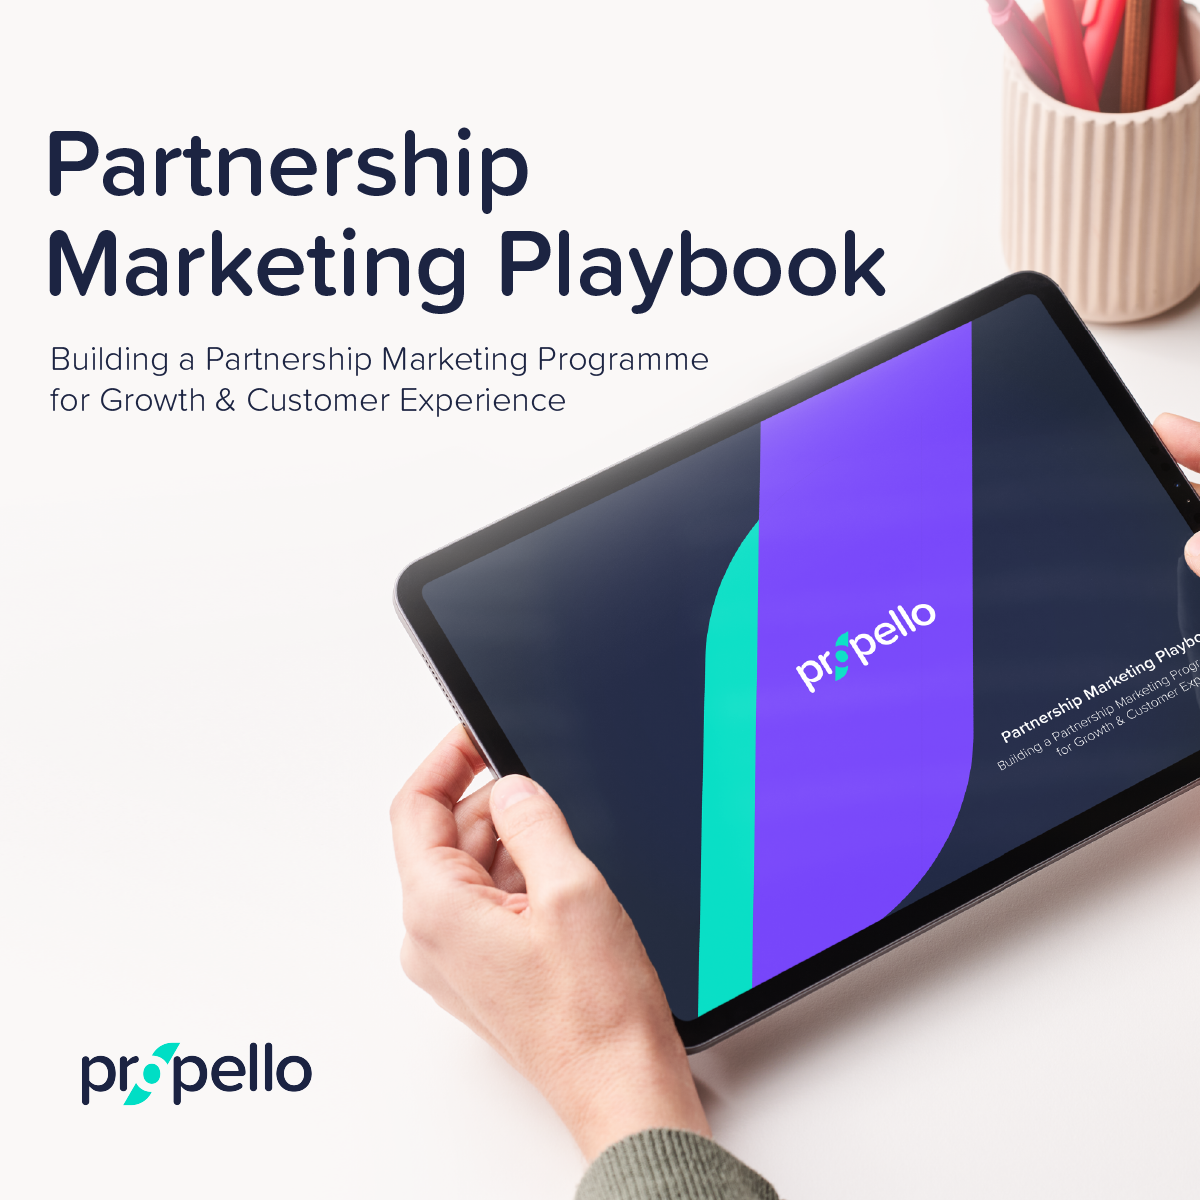 Partnership Marketing Playbook